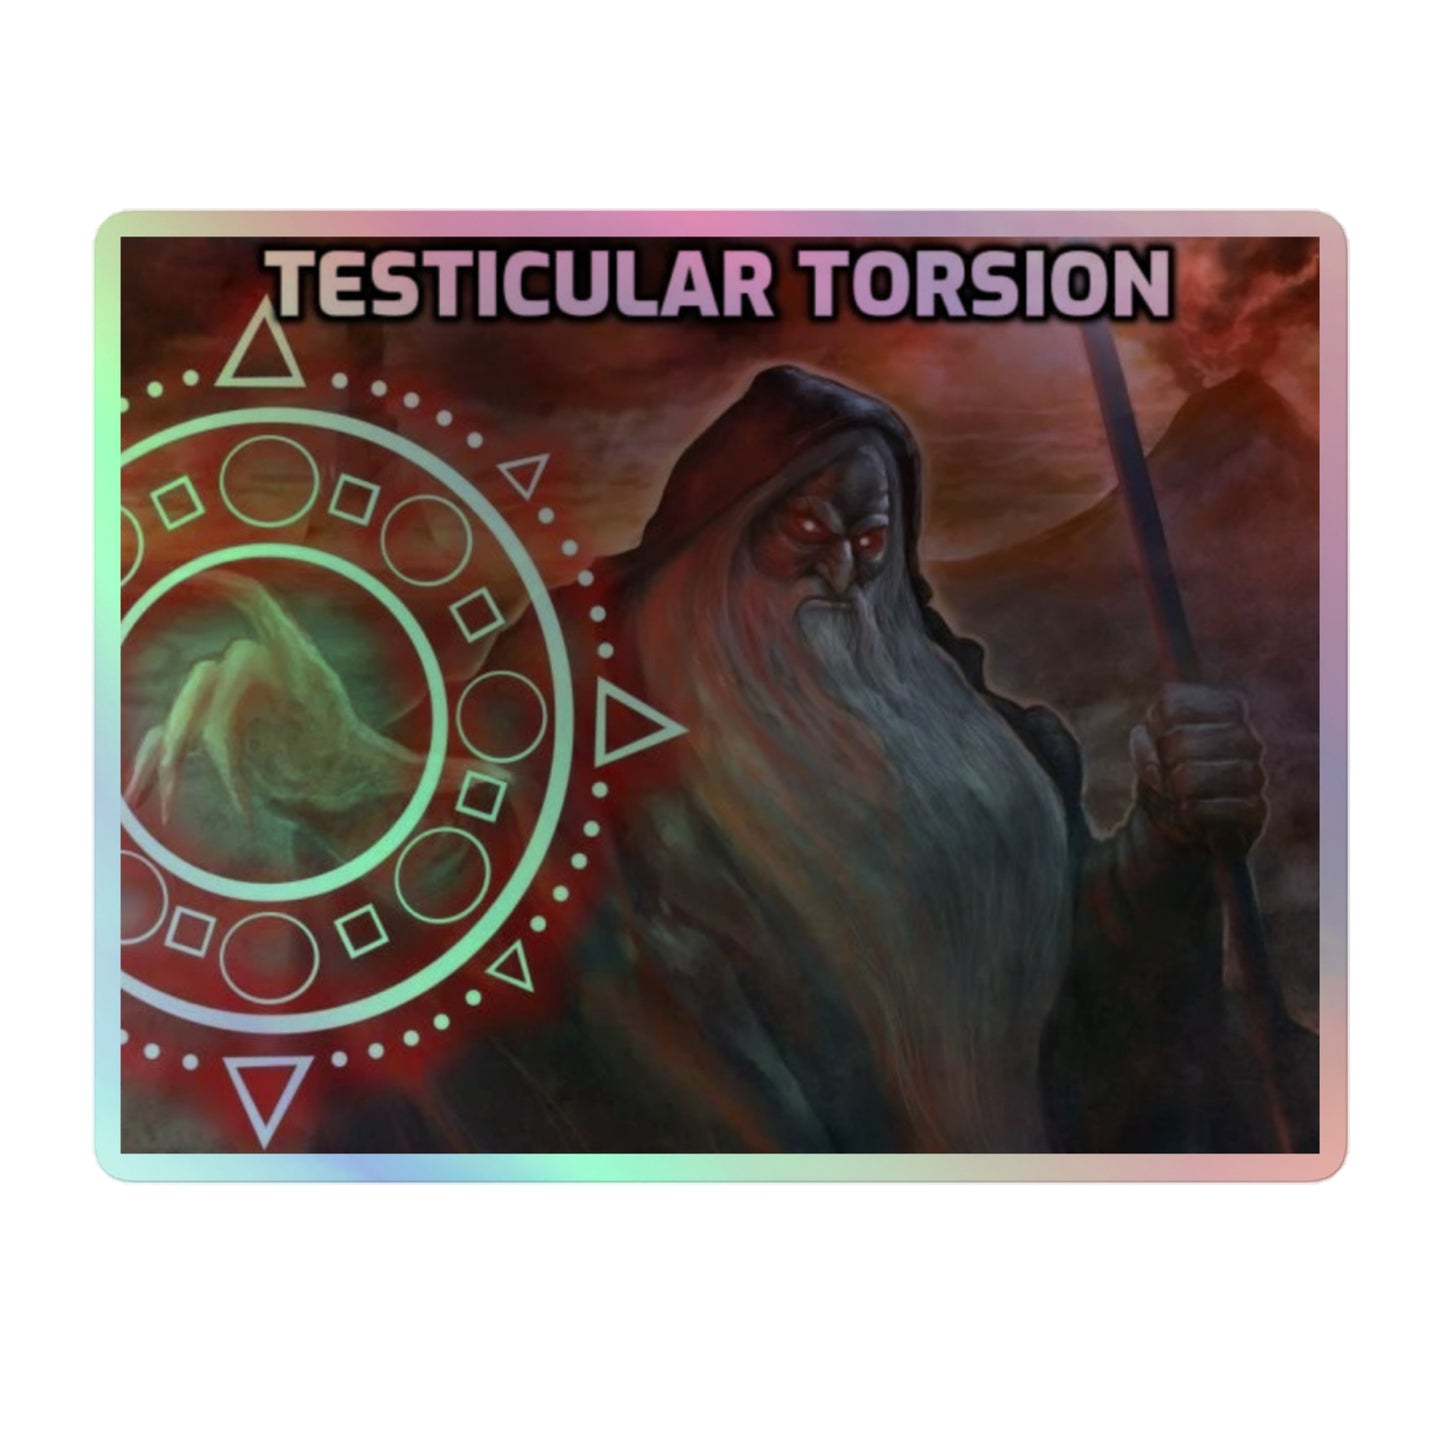 Testicular Torsion